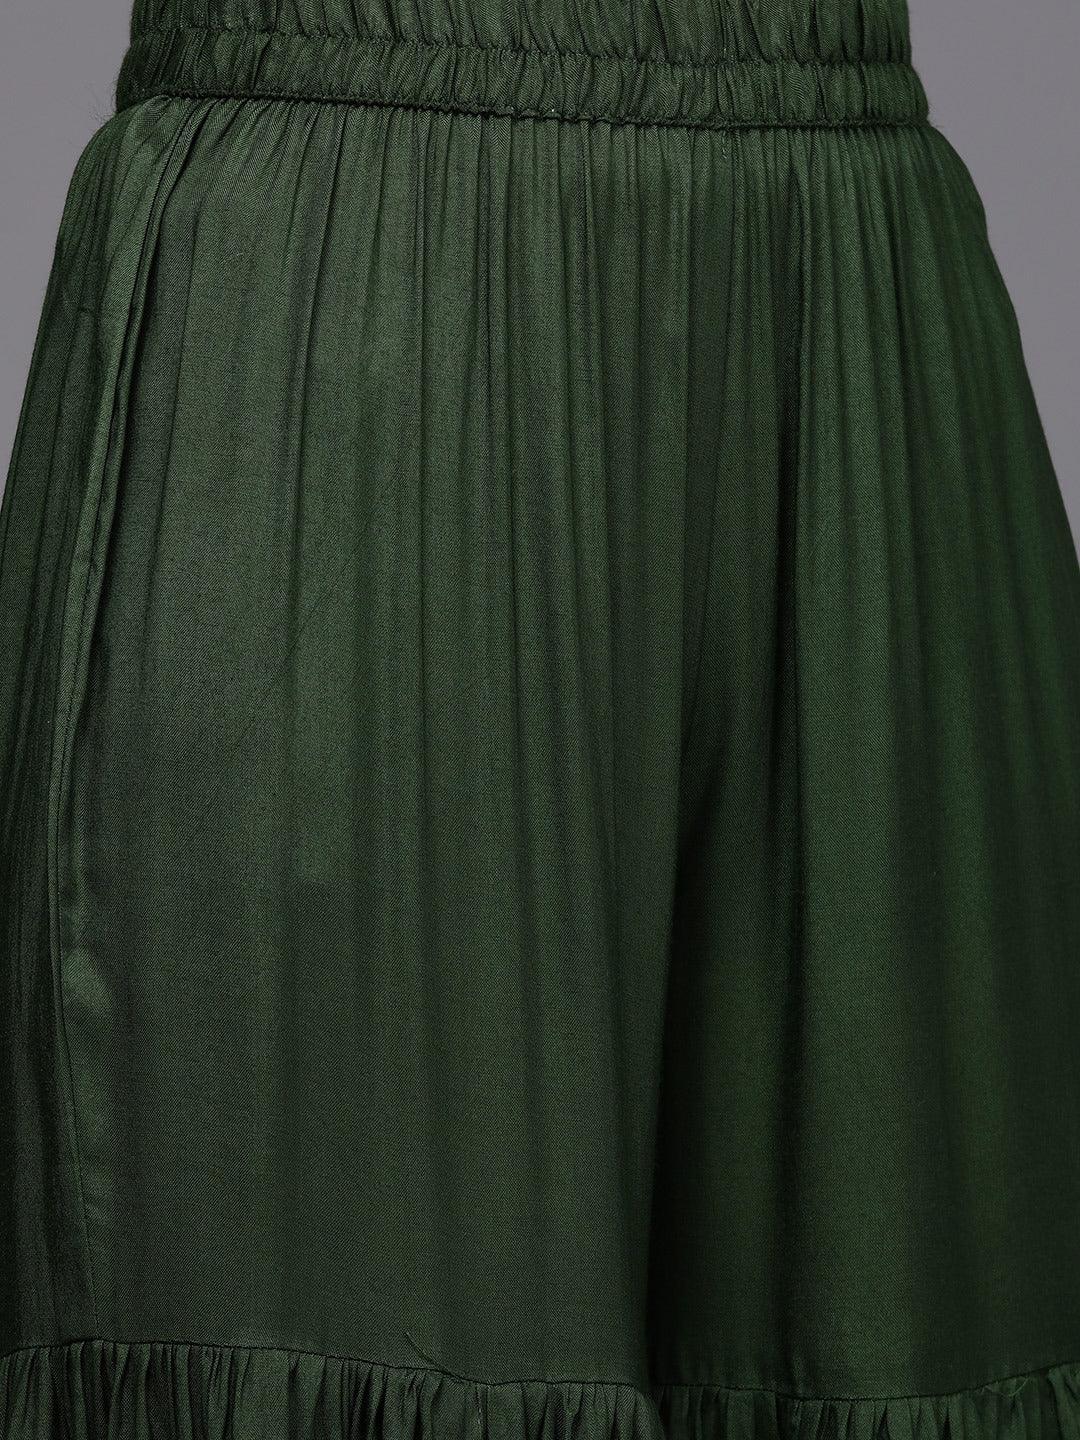 Green Brocade Silk Blend A-Line Kurta With Sharara & Dupatta